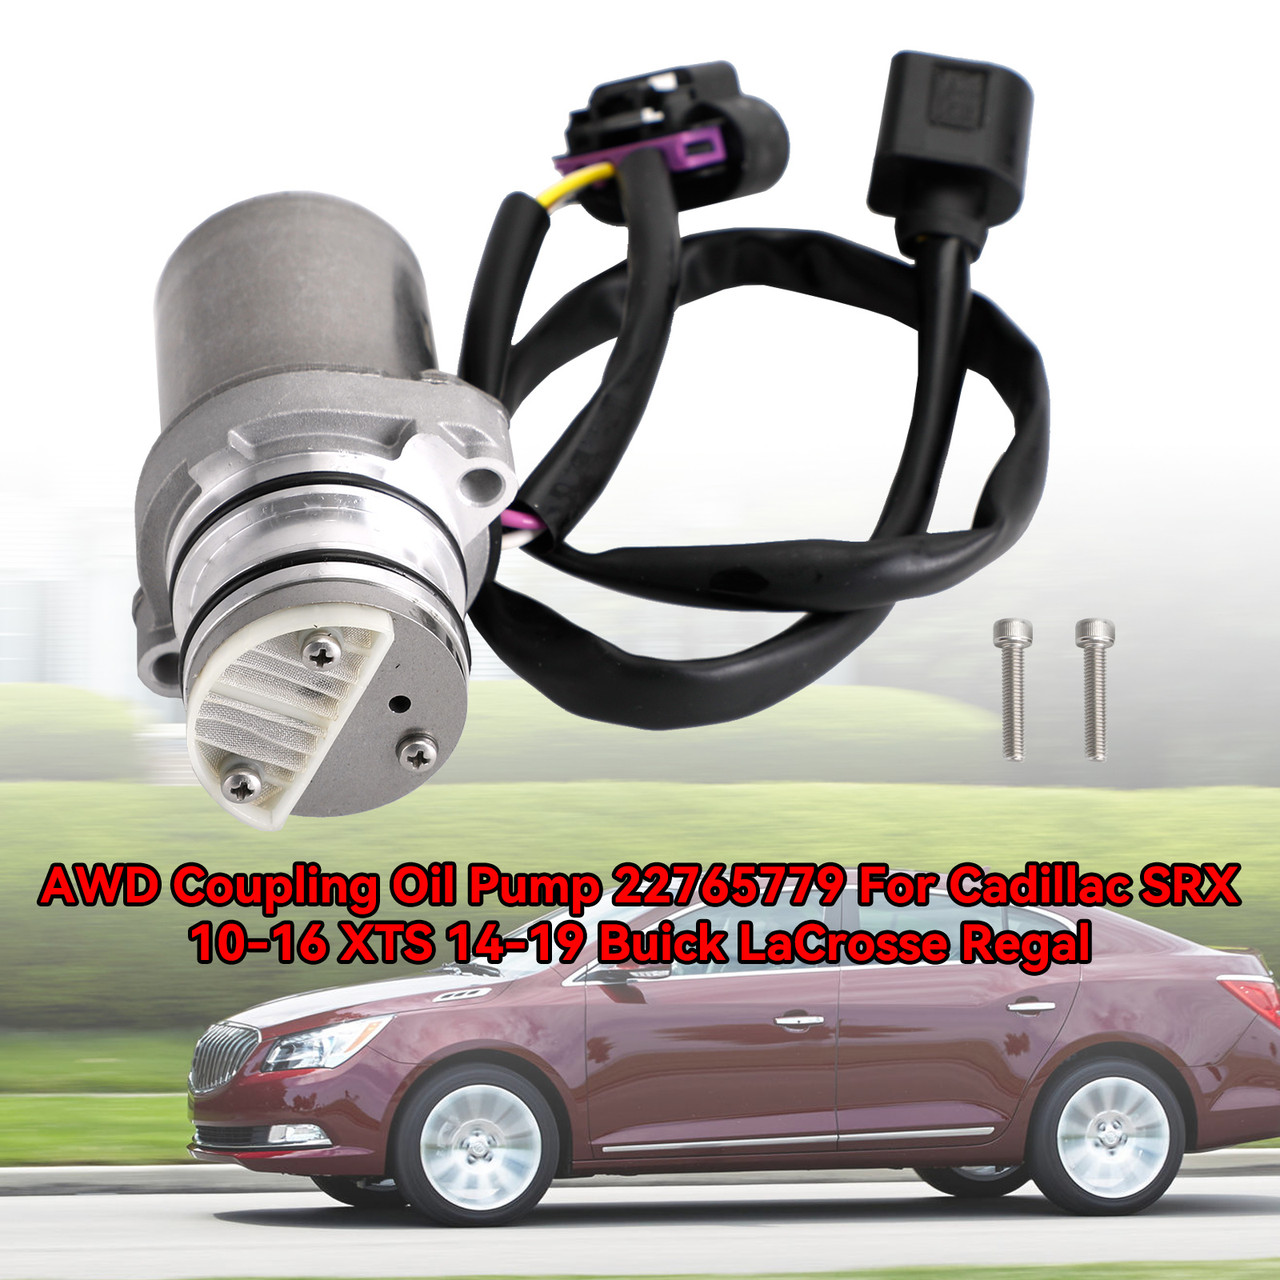 2012-2016 Cadillac SRX V6 3.6L AWD 22765779 AWD Coupling Oil Pump